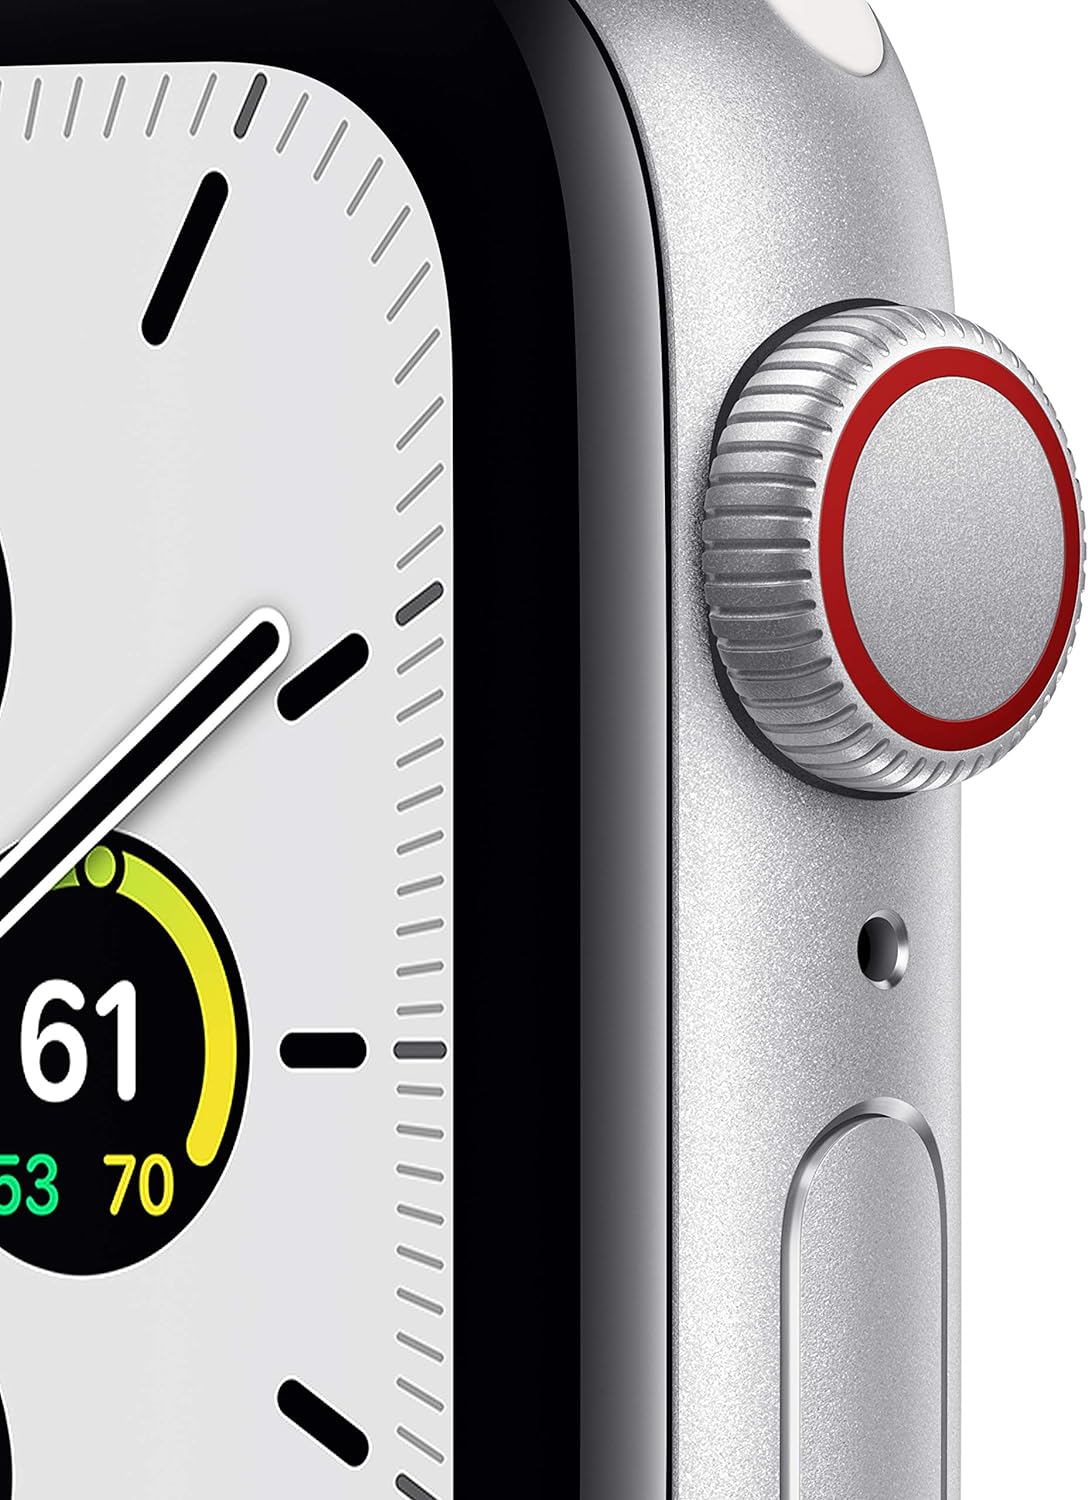 Apple Watch SE 1st Gen (GPS + LTE) 40mm Silver Aluminum Case &amp; White Sport Band (Refurbished)